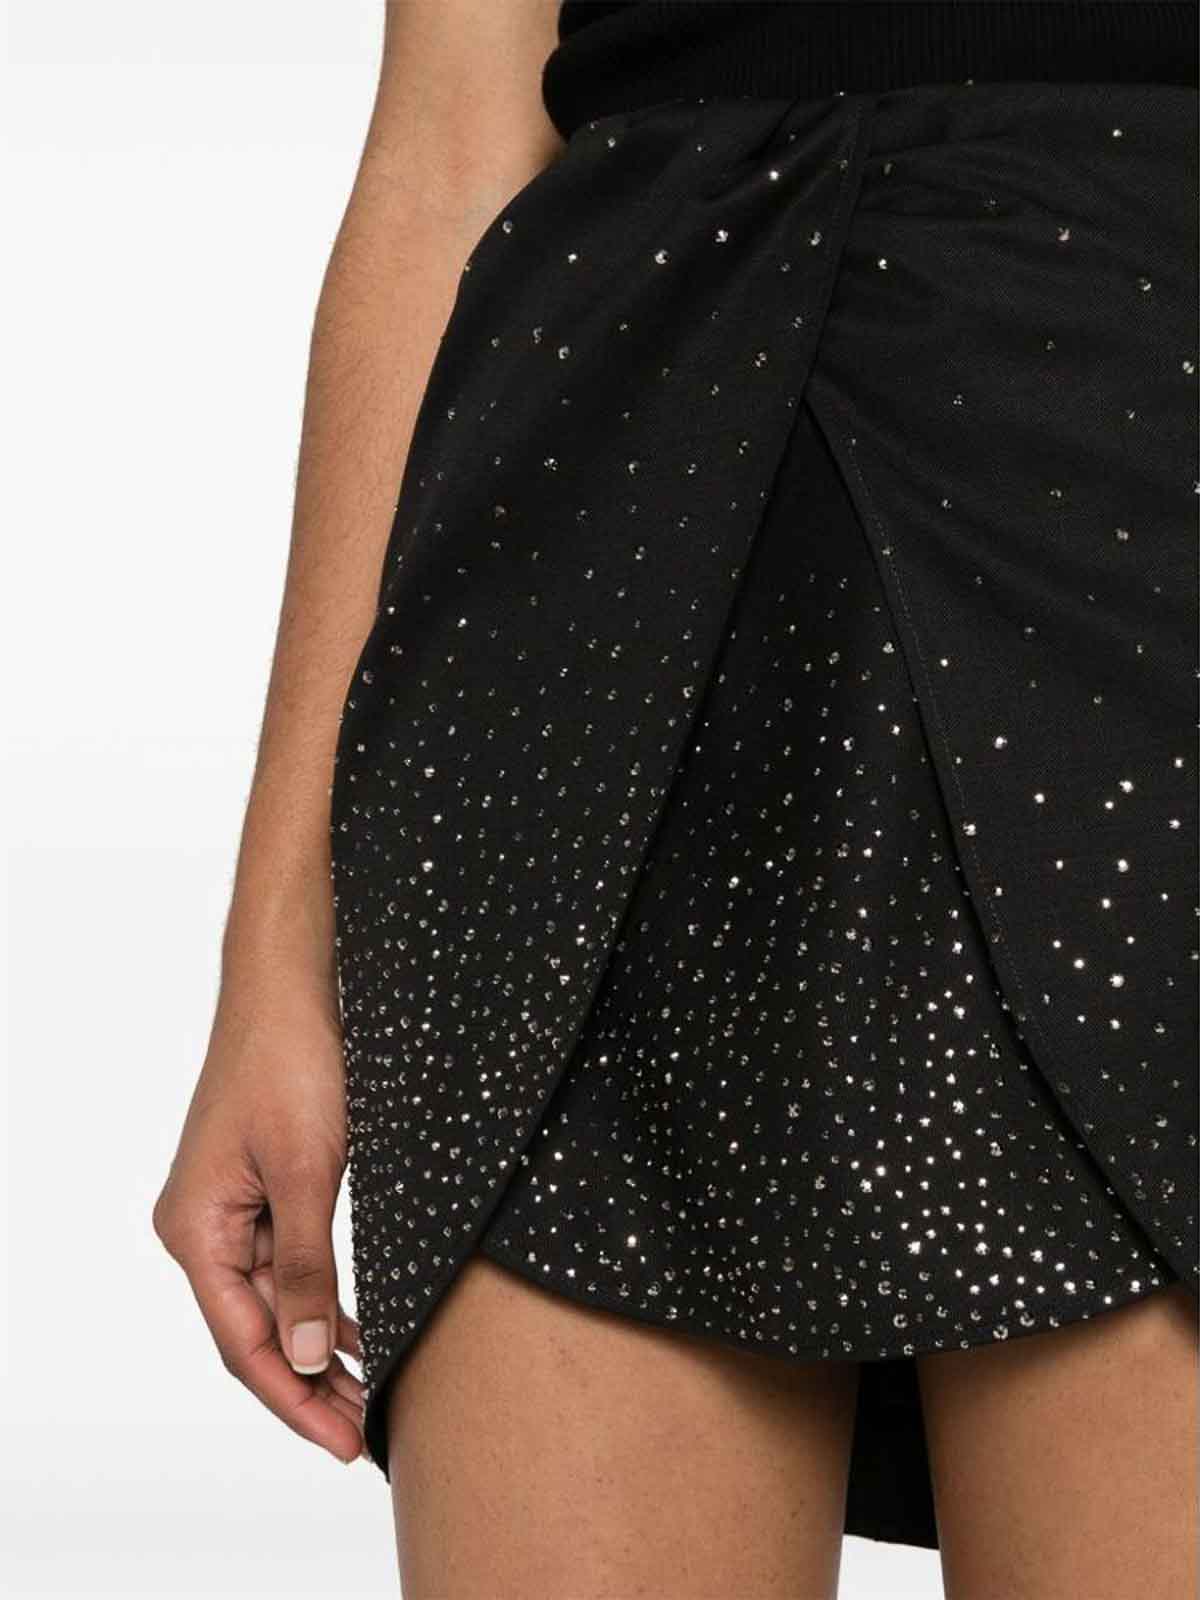 Shop Off-white Black Layered Design Skirt